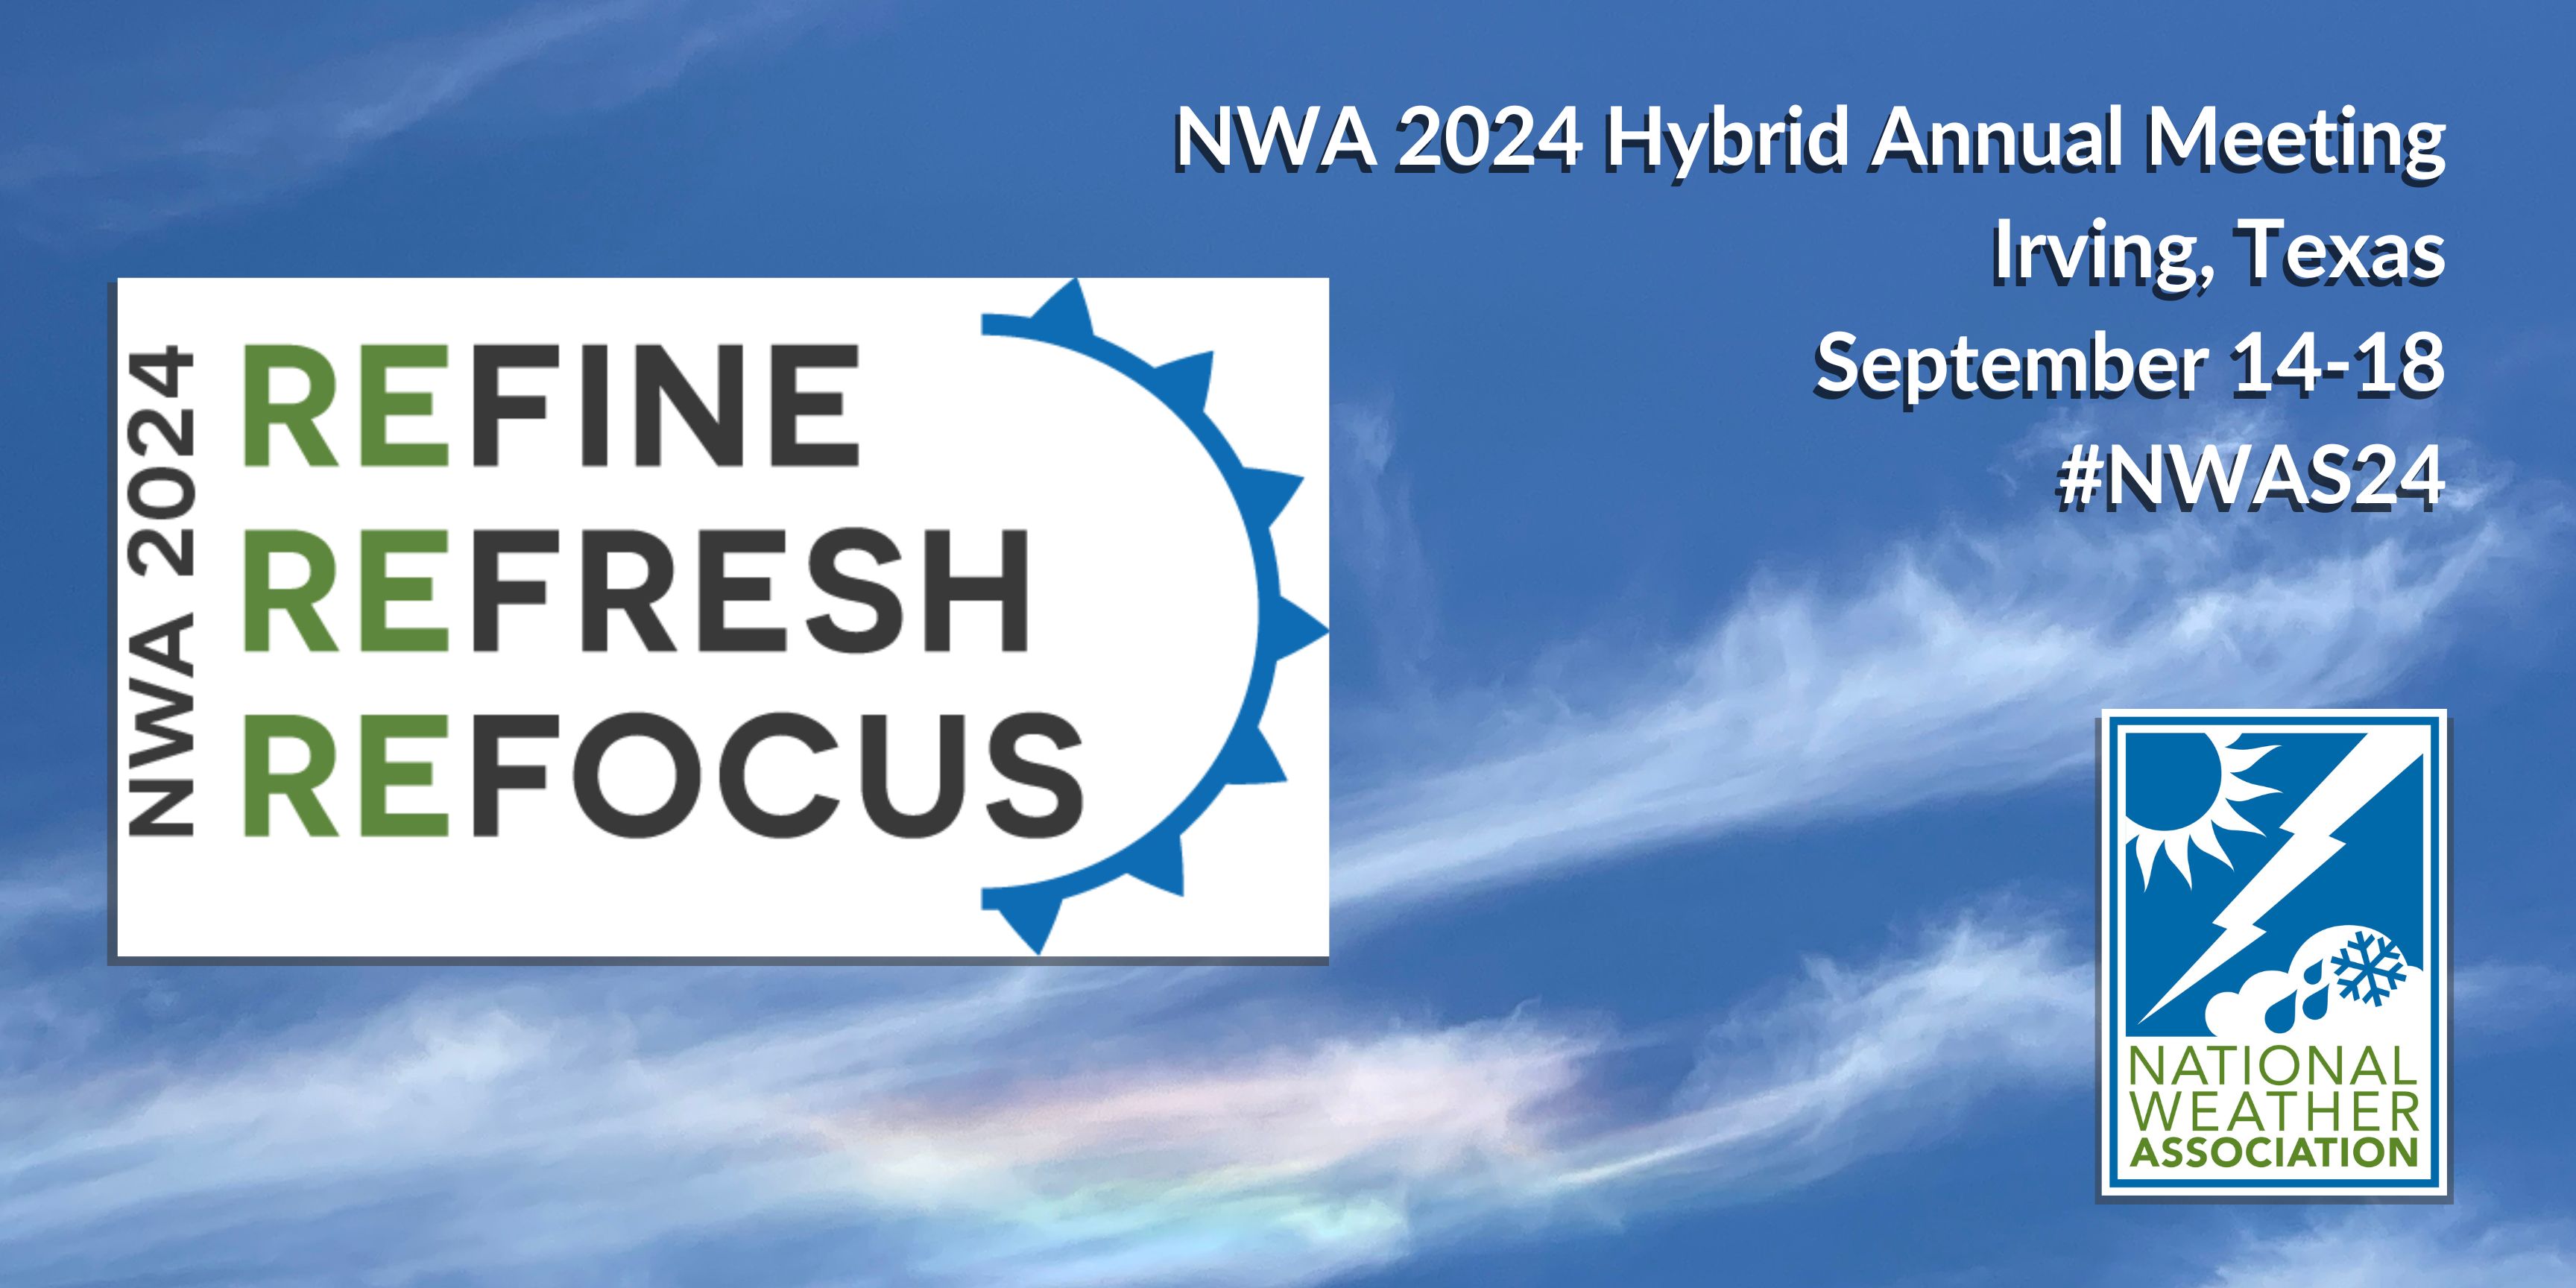 NWA 2024 Hybrid Annual Meeting September 14-18, 2024. Theme is Refine, Refresh, Refocus.